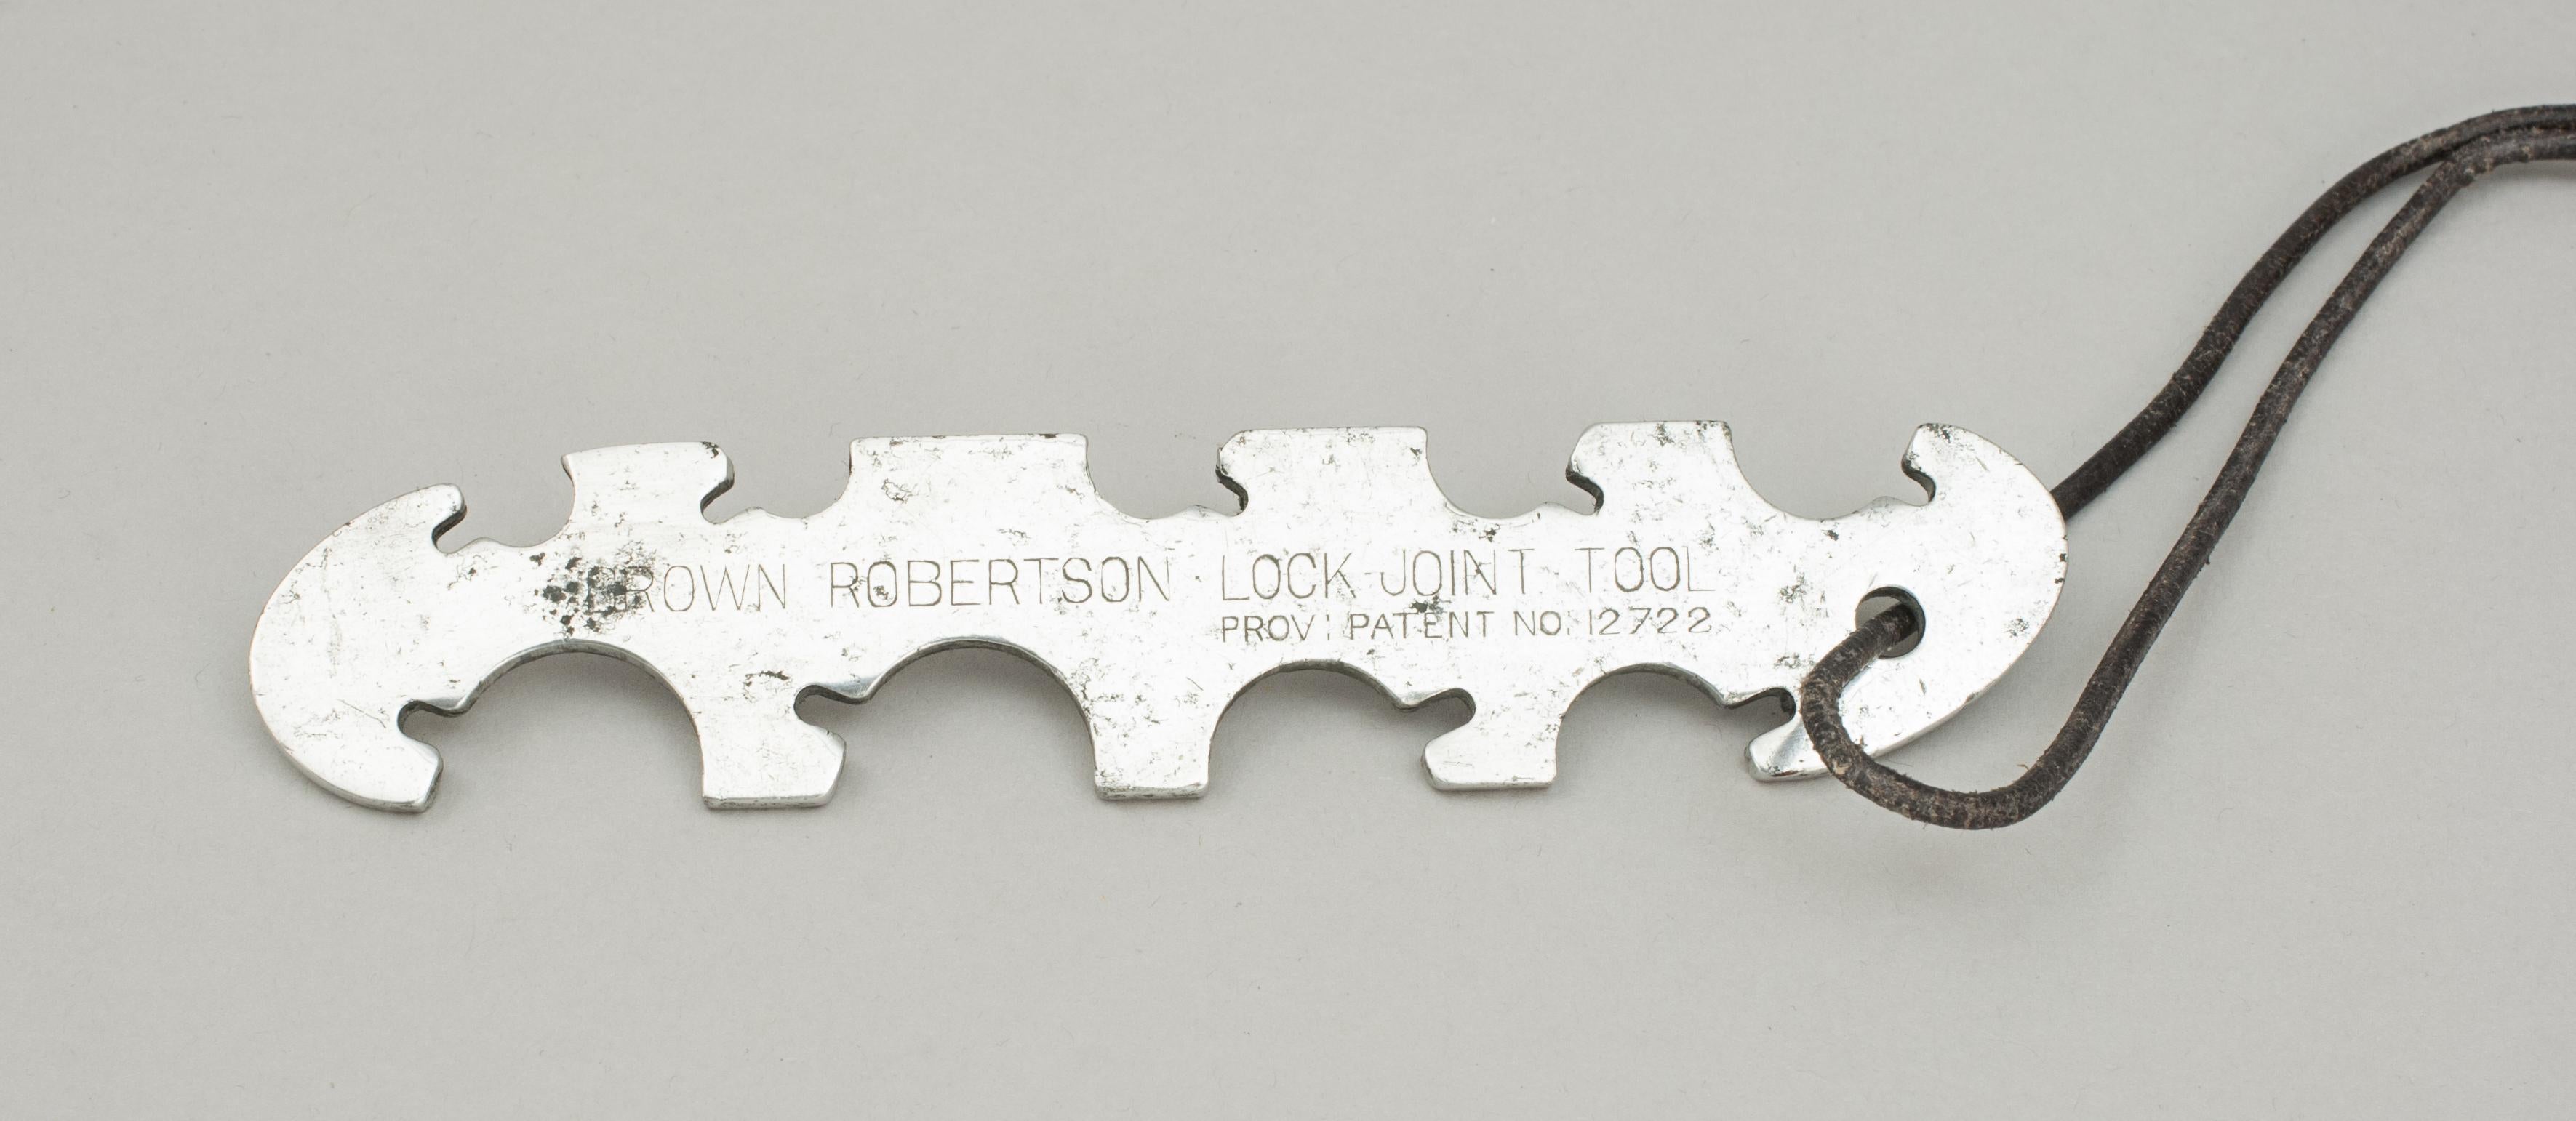 robertson tool